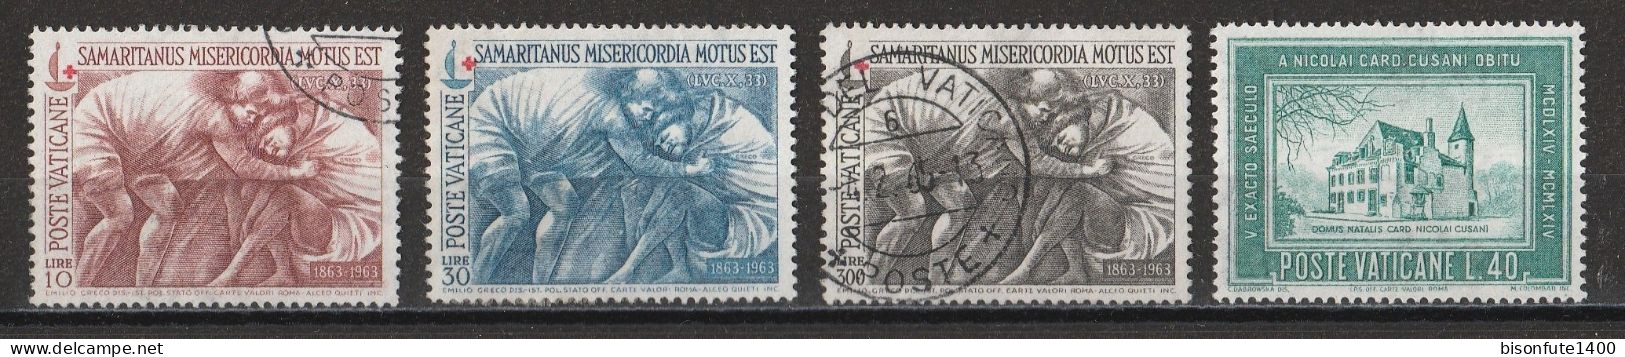 Vatican 1964 : Timbres Yvert & Tellier N° 405 - 406 - 407 - 408 - 409 - 410 - 411 - 412 - 413 Et 414 Oblitérés. - Usados